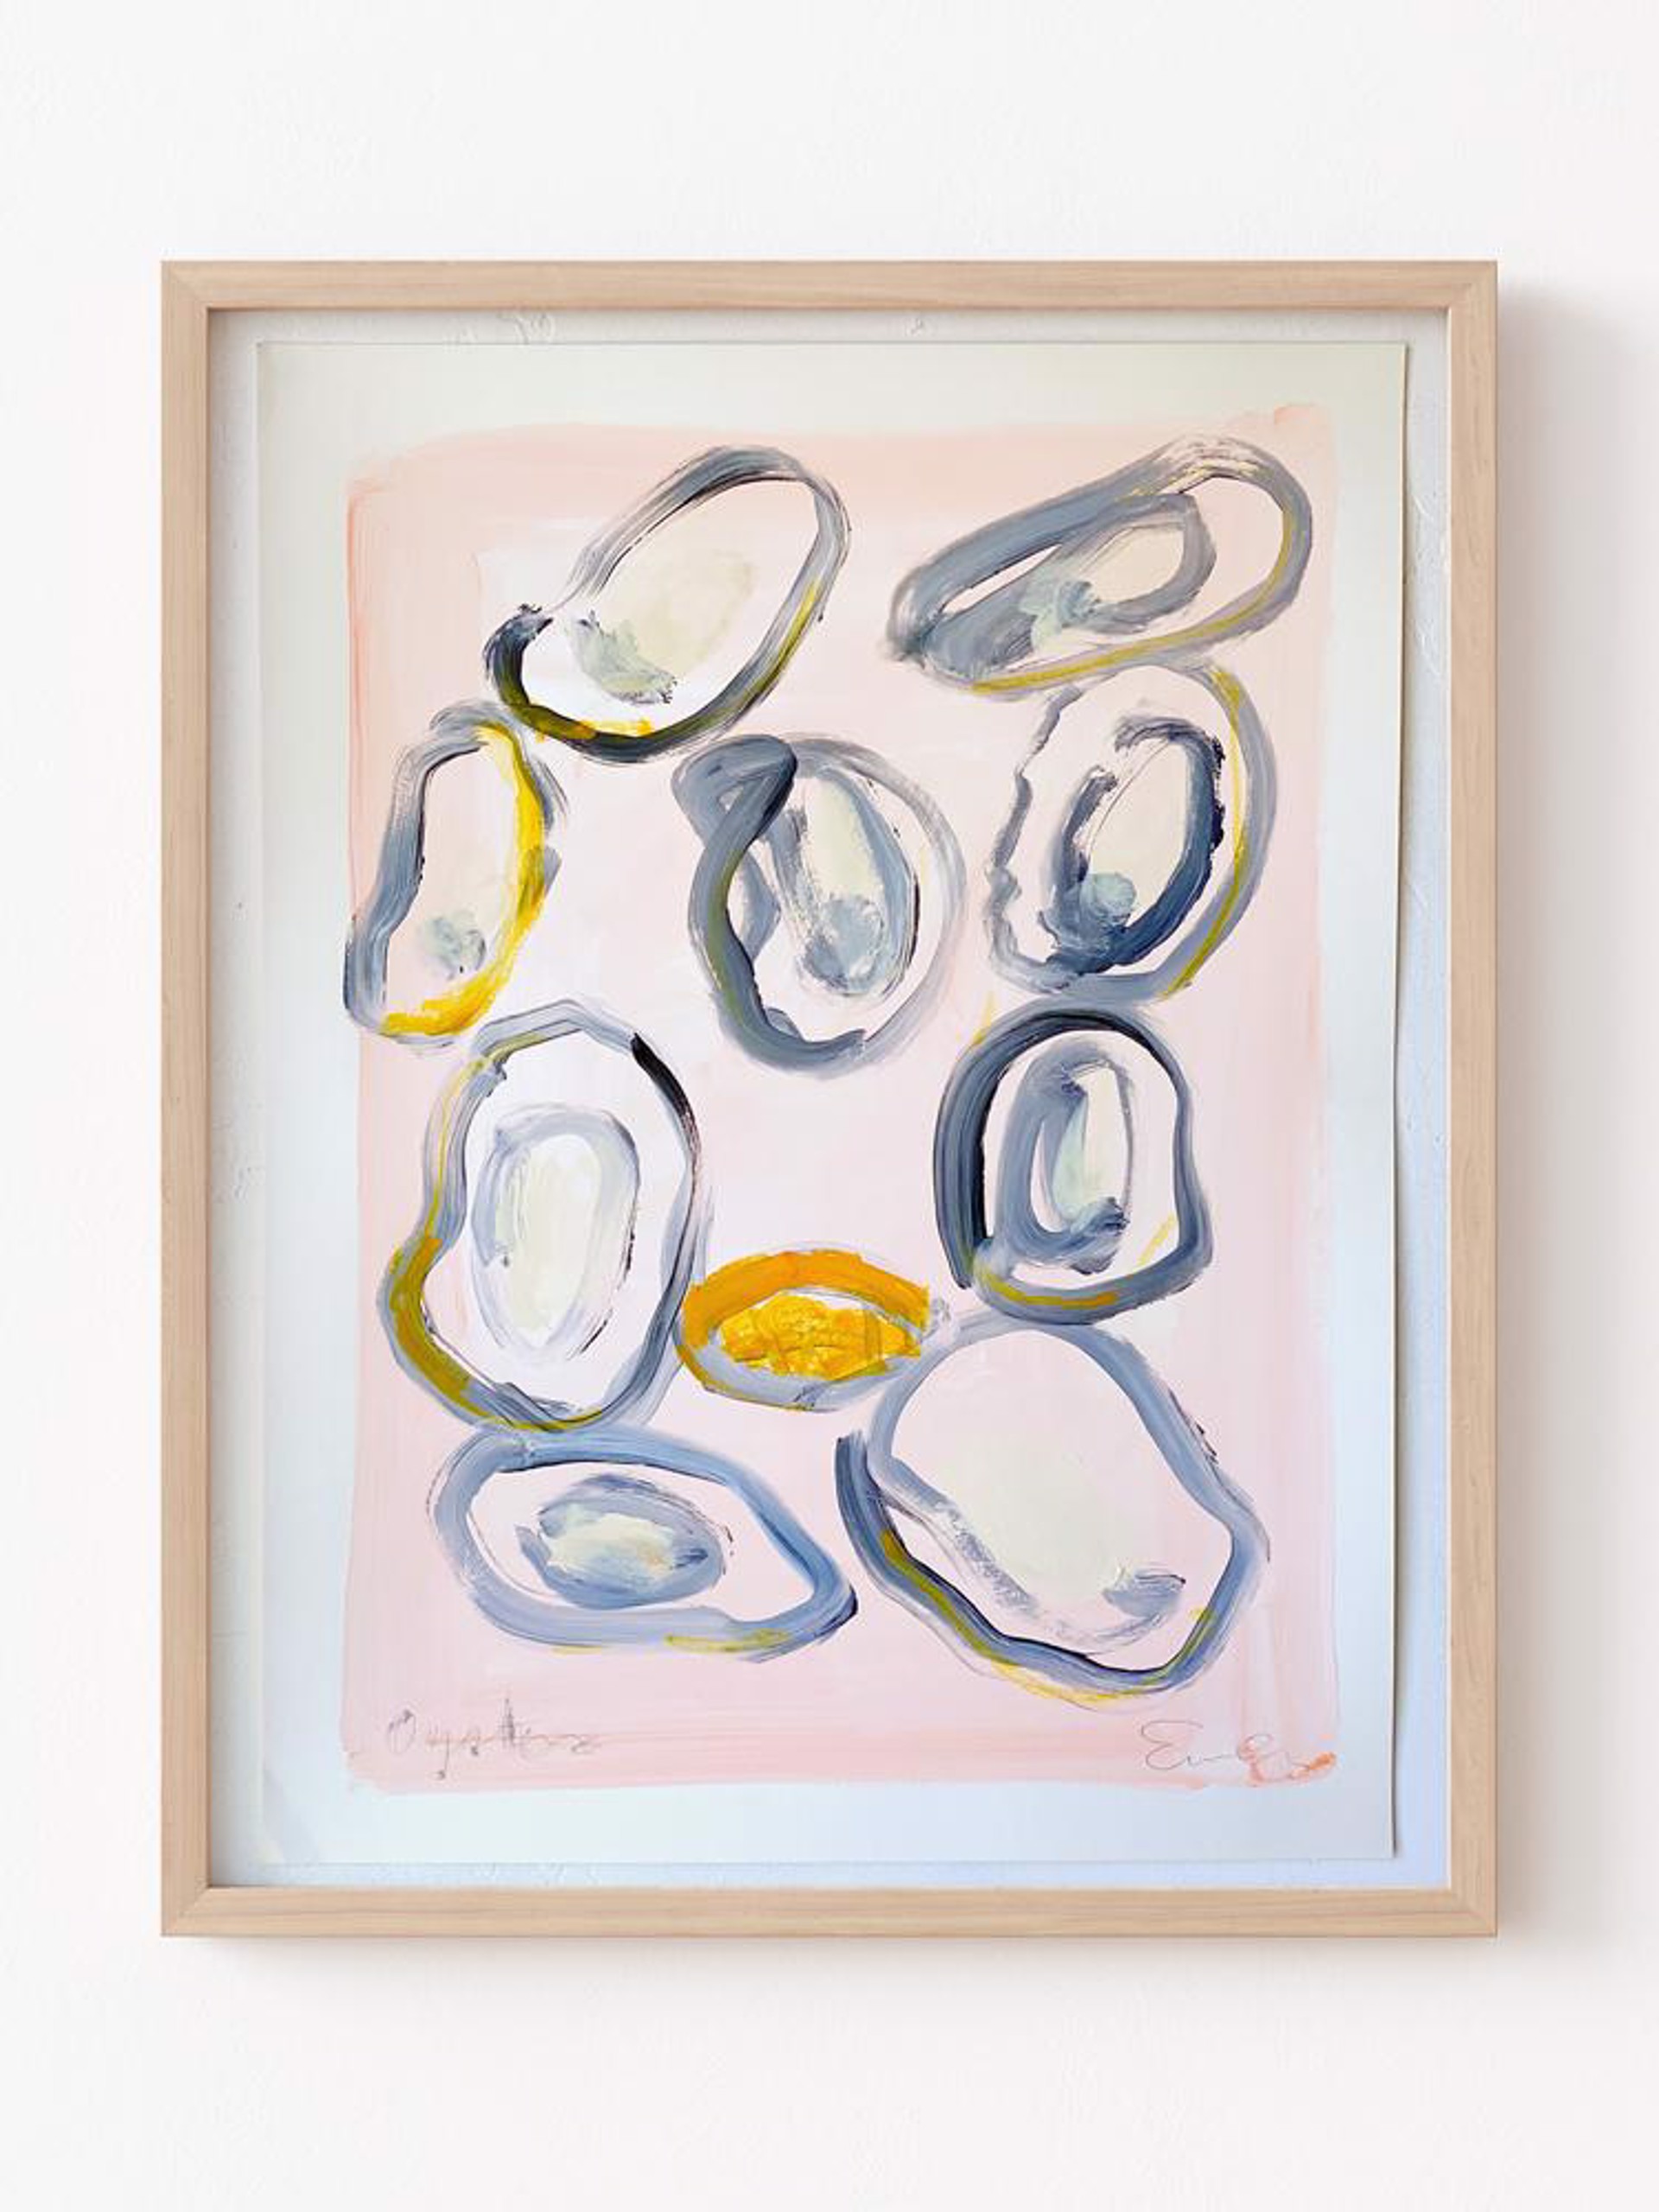 Nine Oysters, Peachy by Anne-Louise Ewen